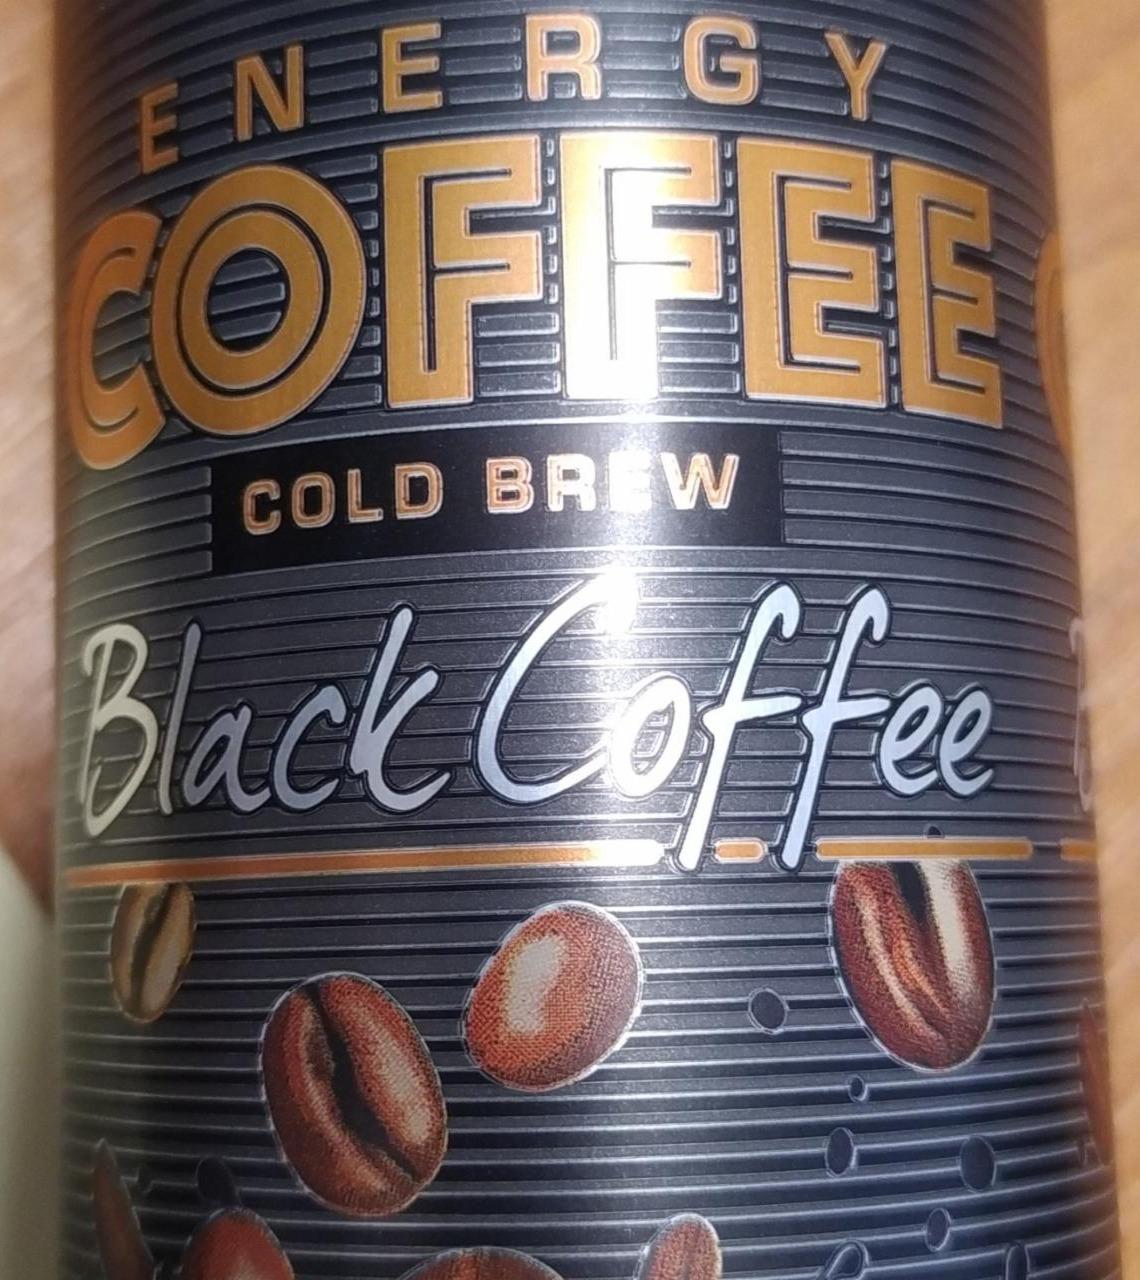 Fotografie - Energy Coffee cold brew Black Coffee